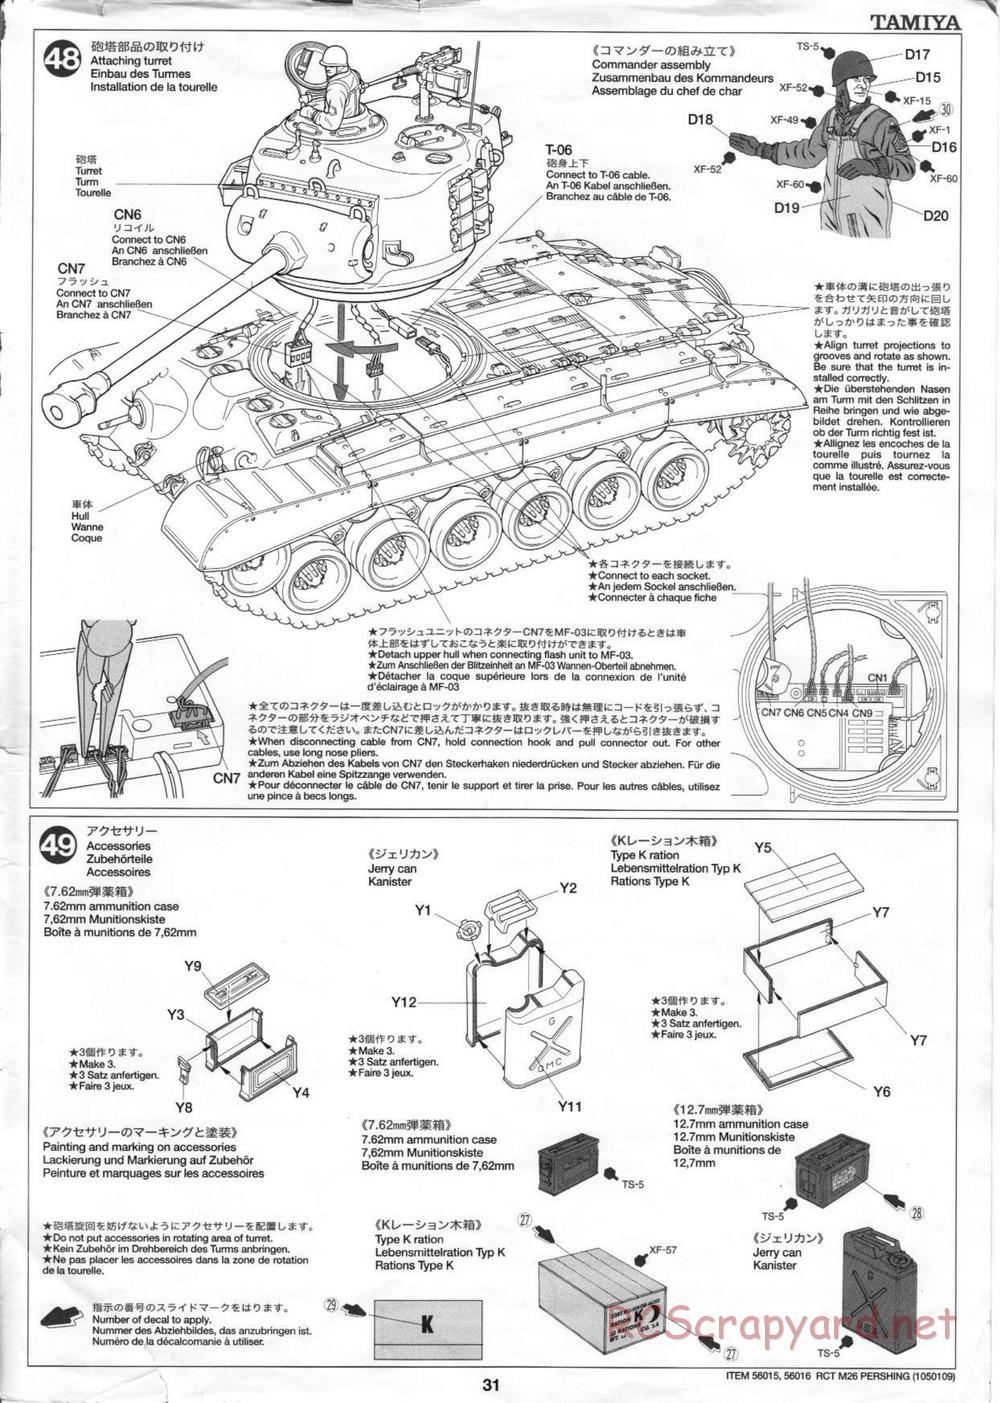 Tamiya - M26 Pershing - 1/16 Scale Chassis - Manual - Page 31